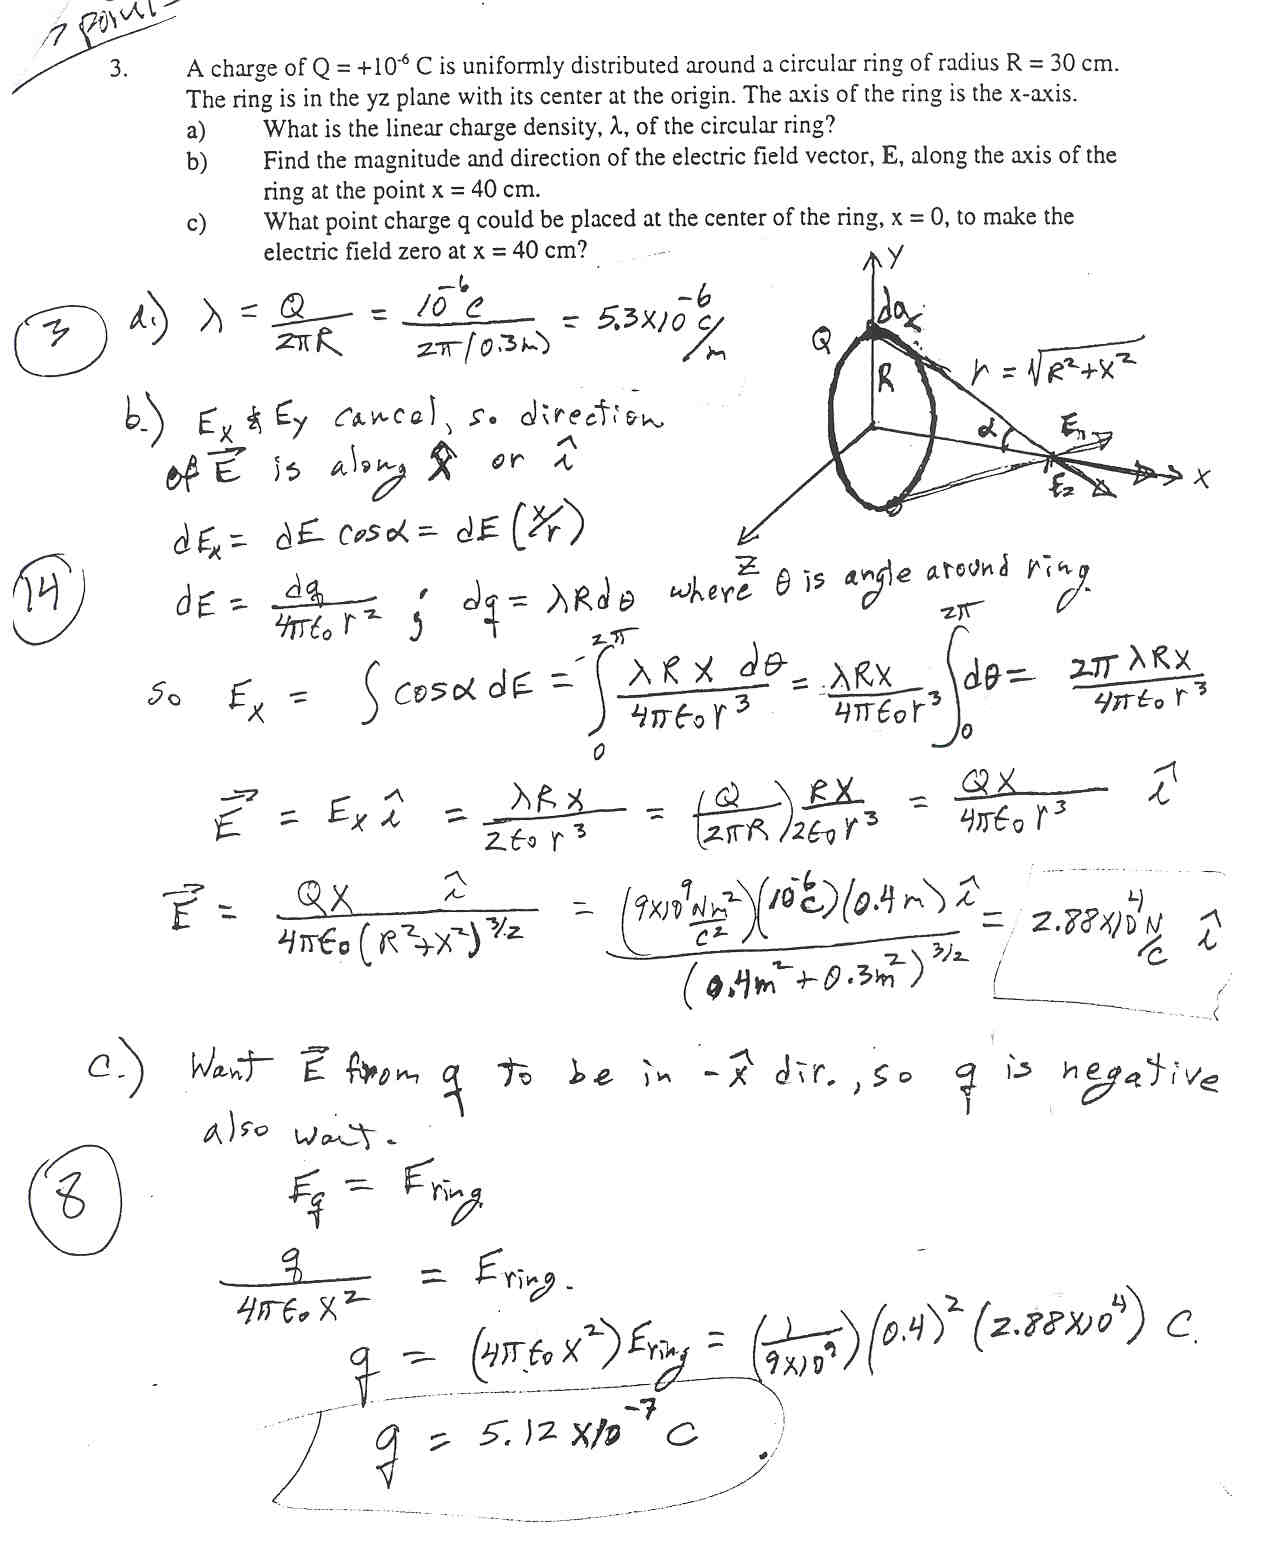 General Physics II Summer 2002 Practice Exam 1 Solutions